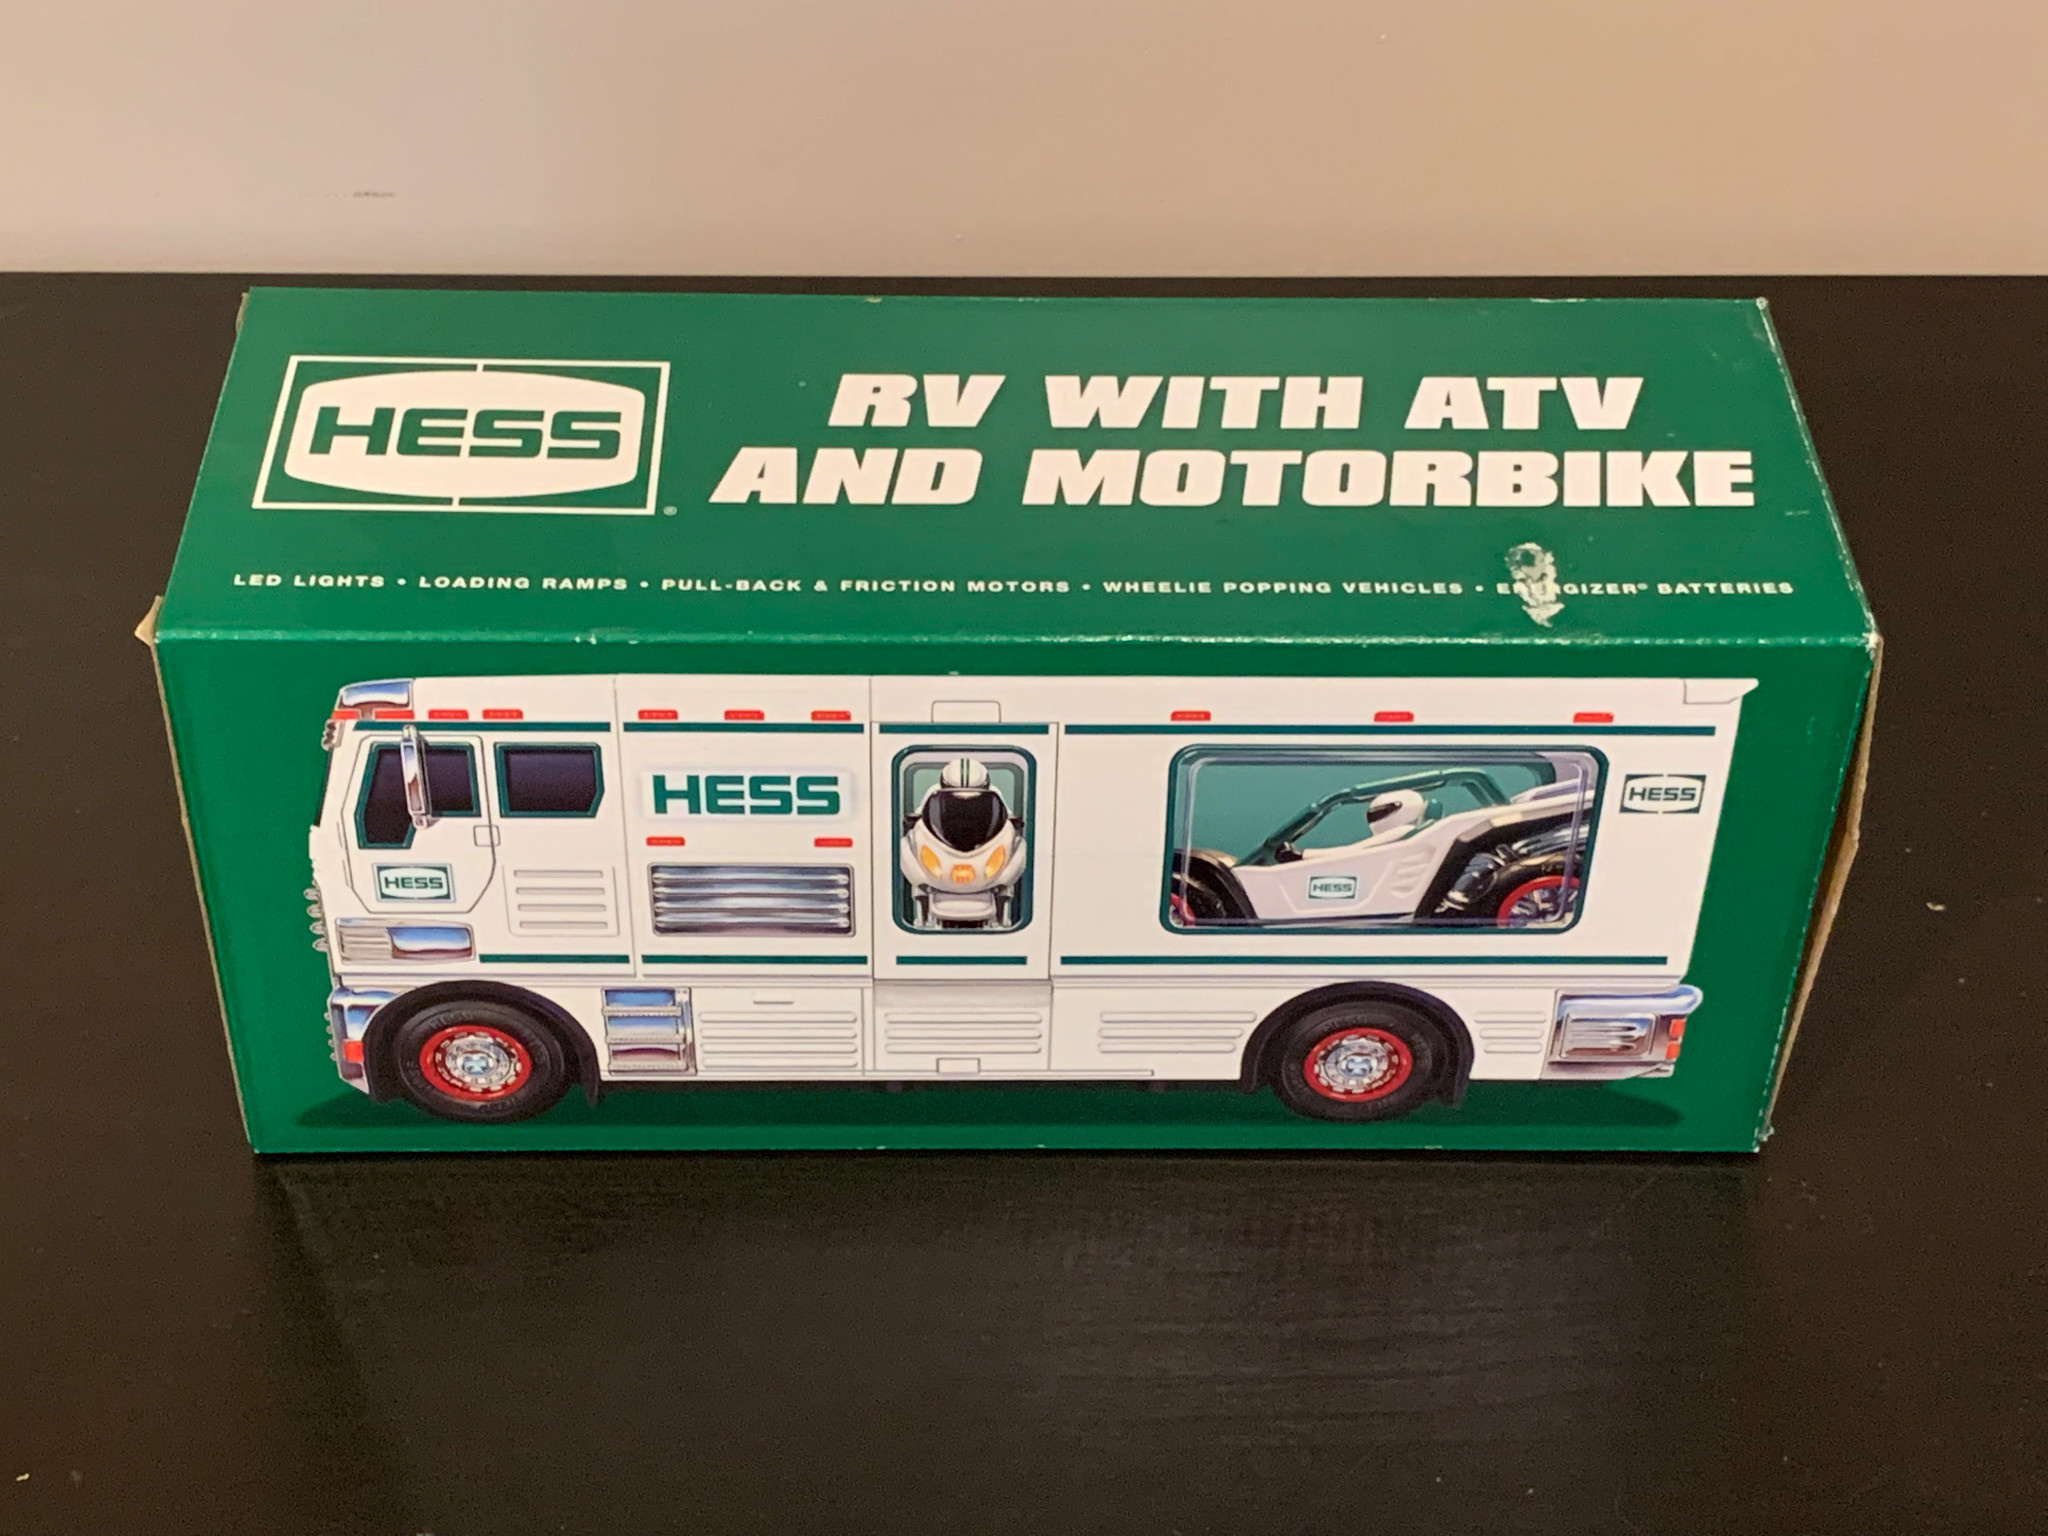 HESS 2018 Hess RV with ATV and Motorbike